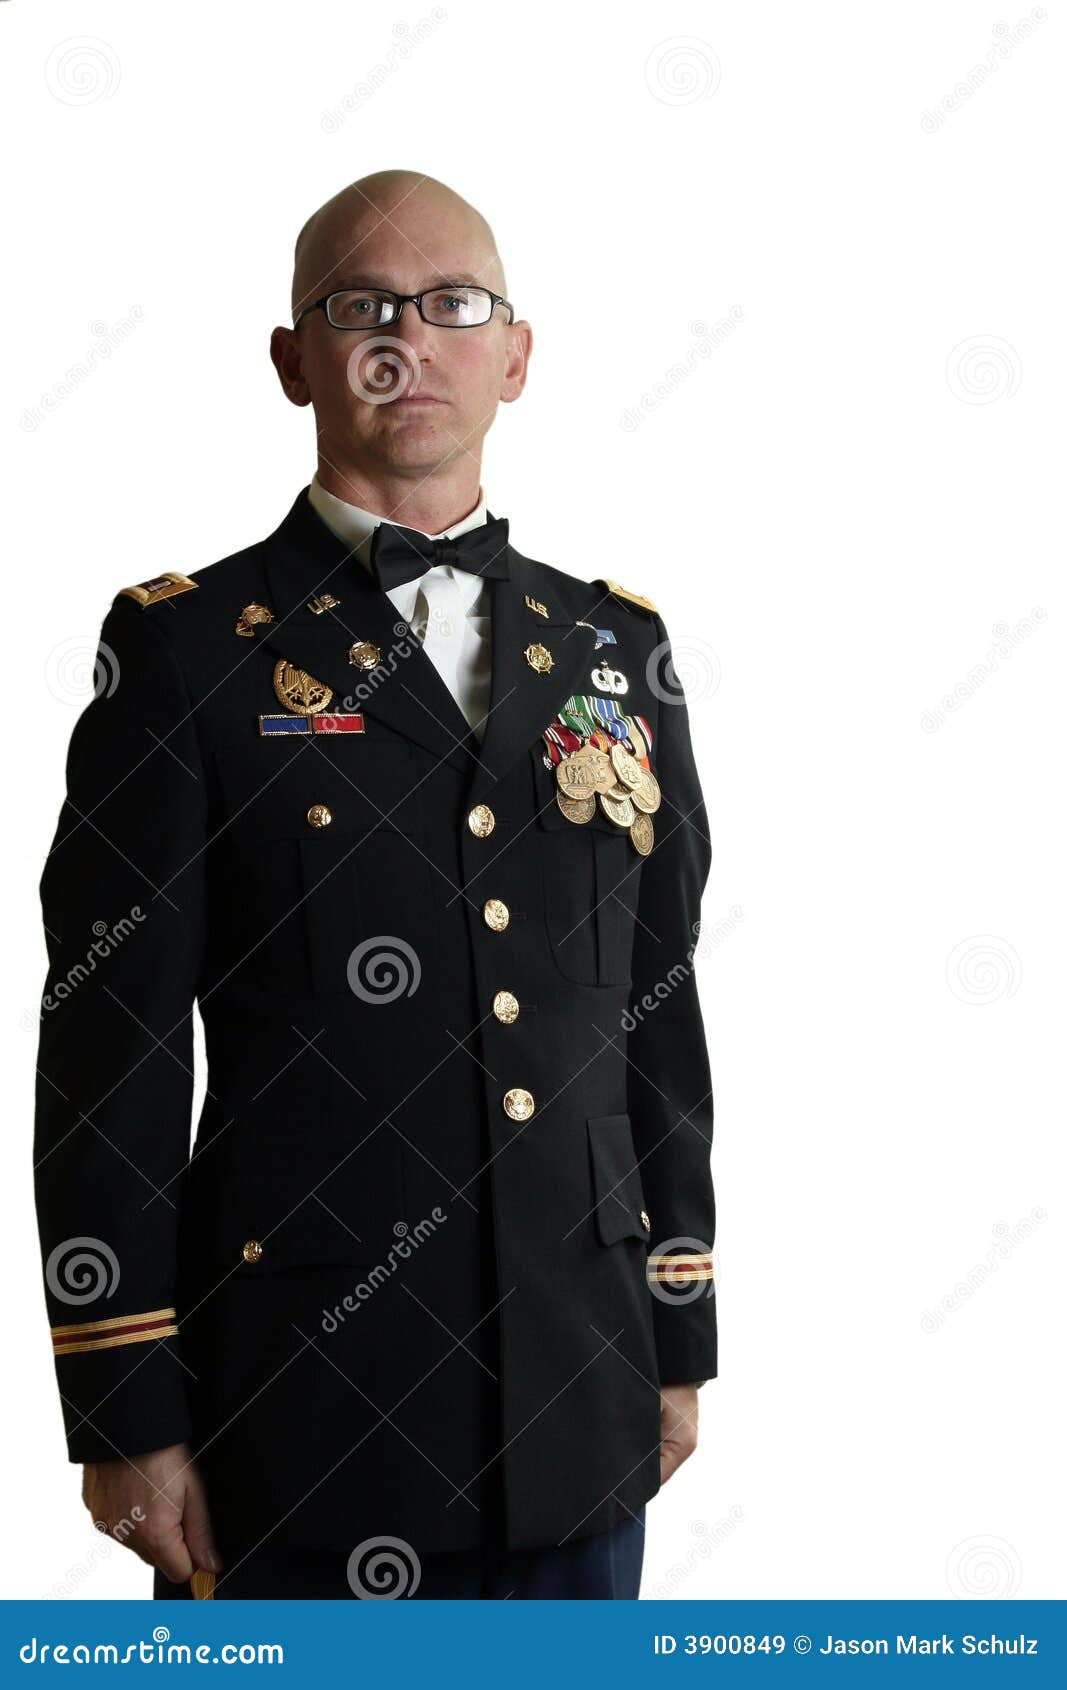 us army officer dress uniform